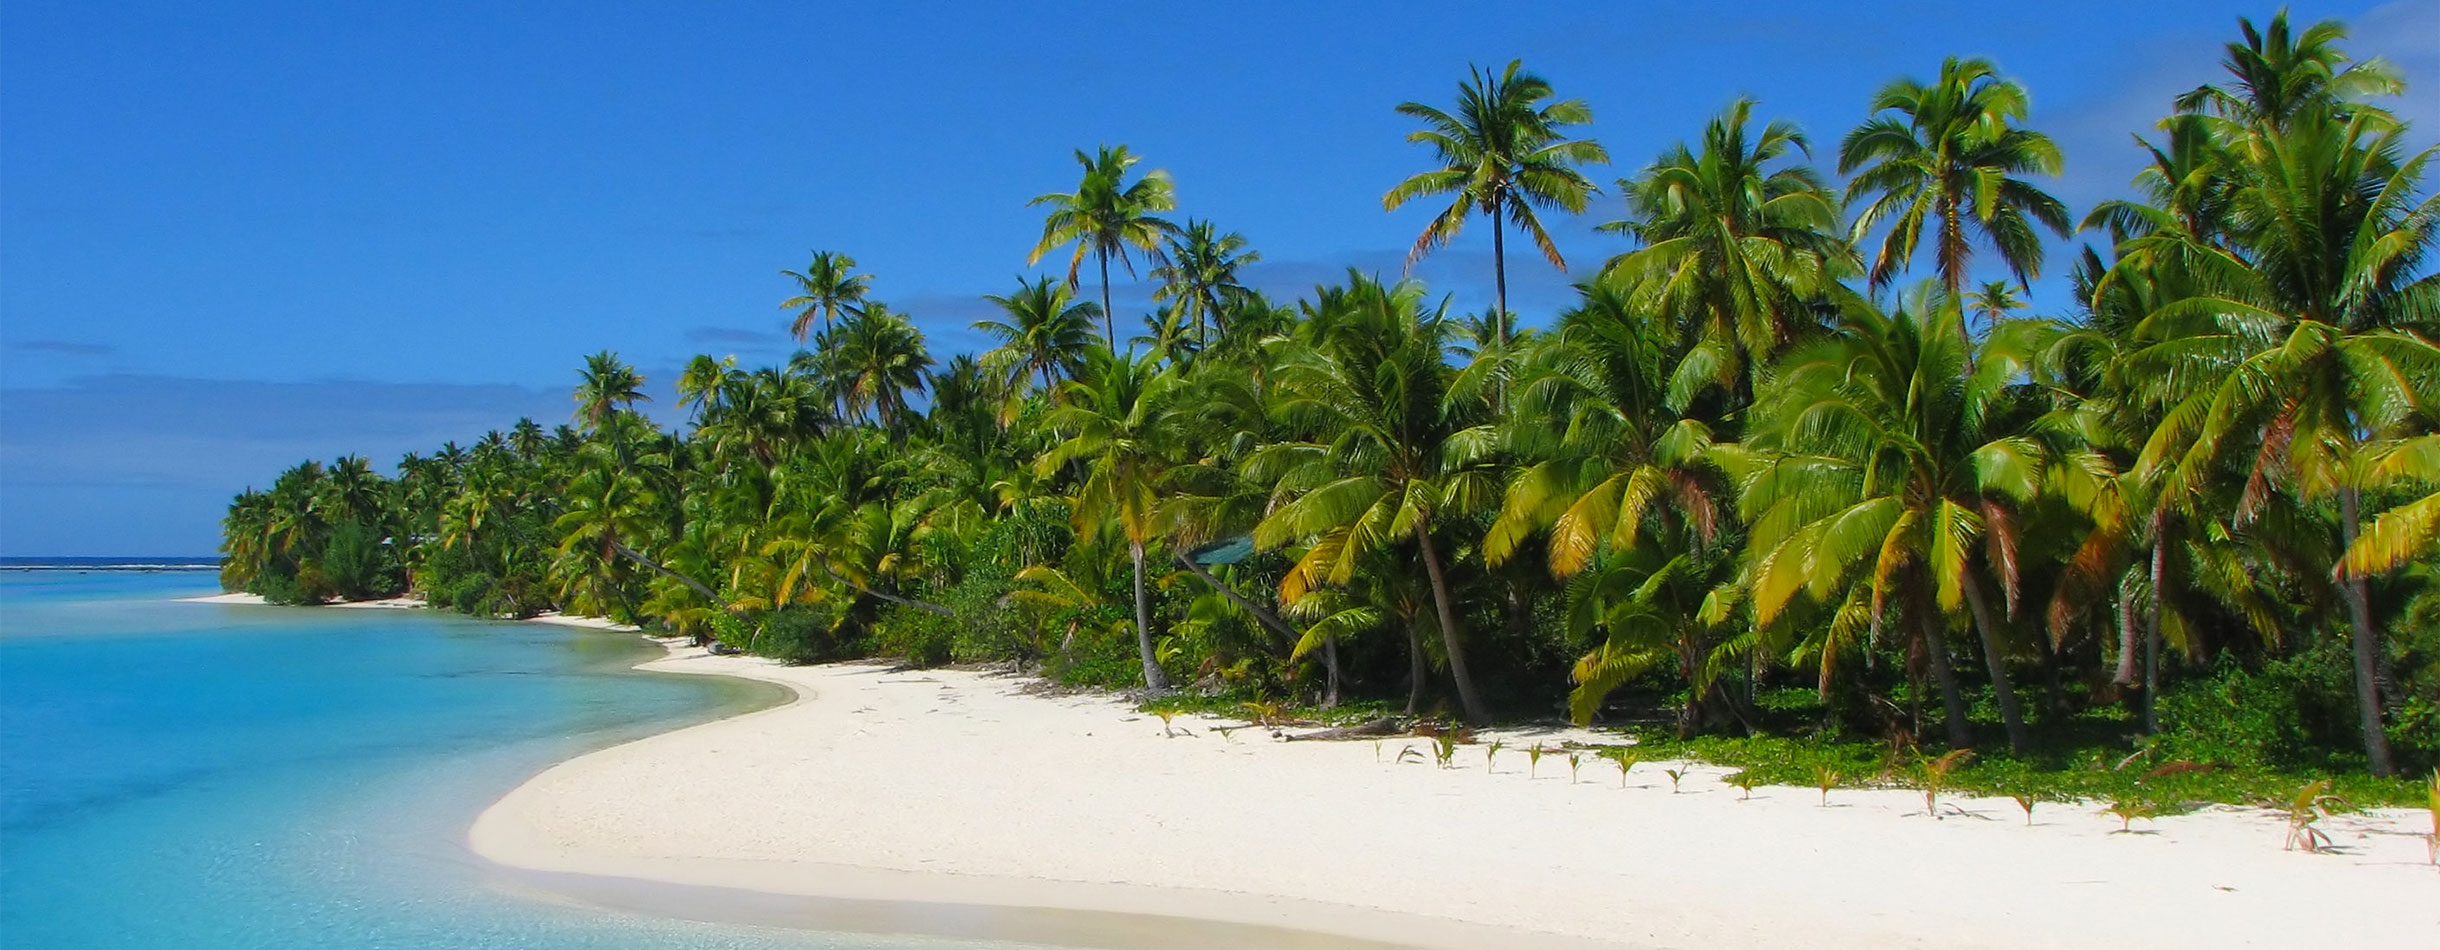 Stunning white sandy beach and lush green palms trees, Rarotonga, Cook Islands